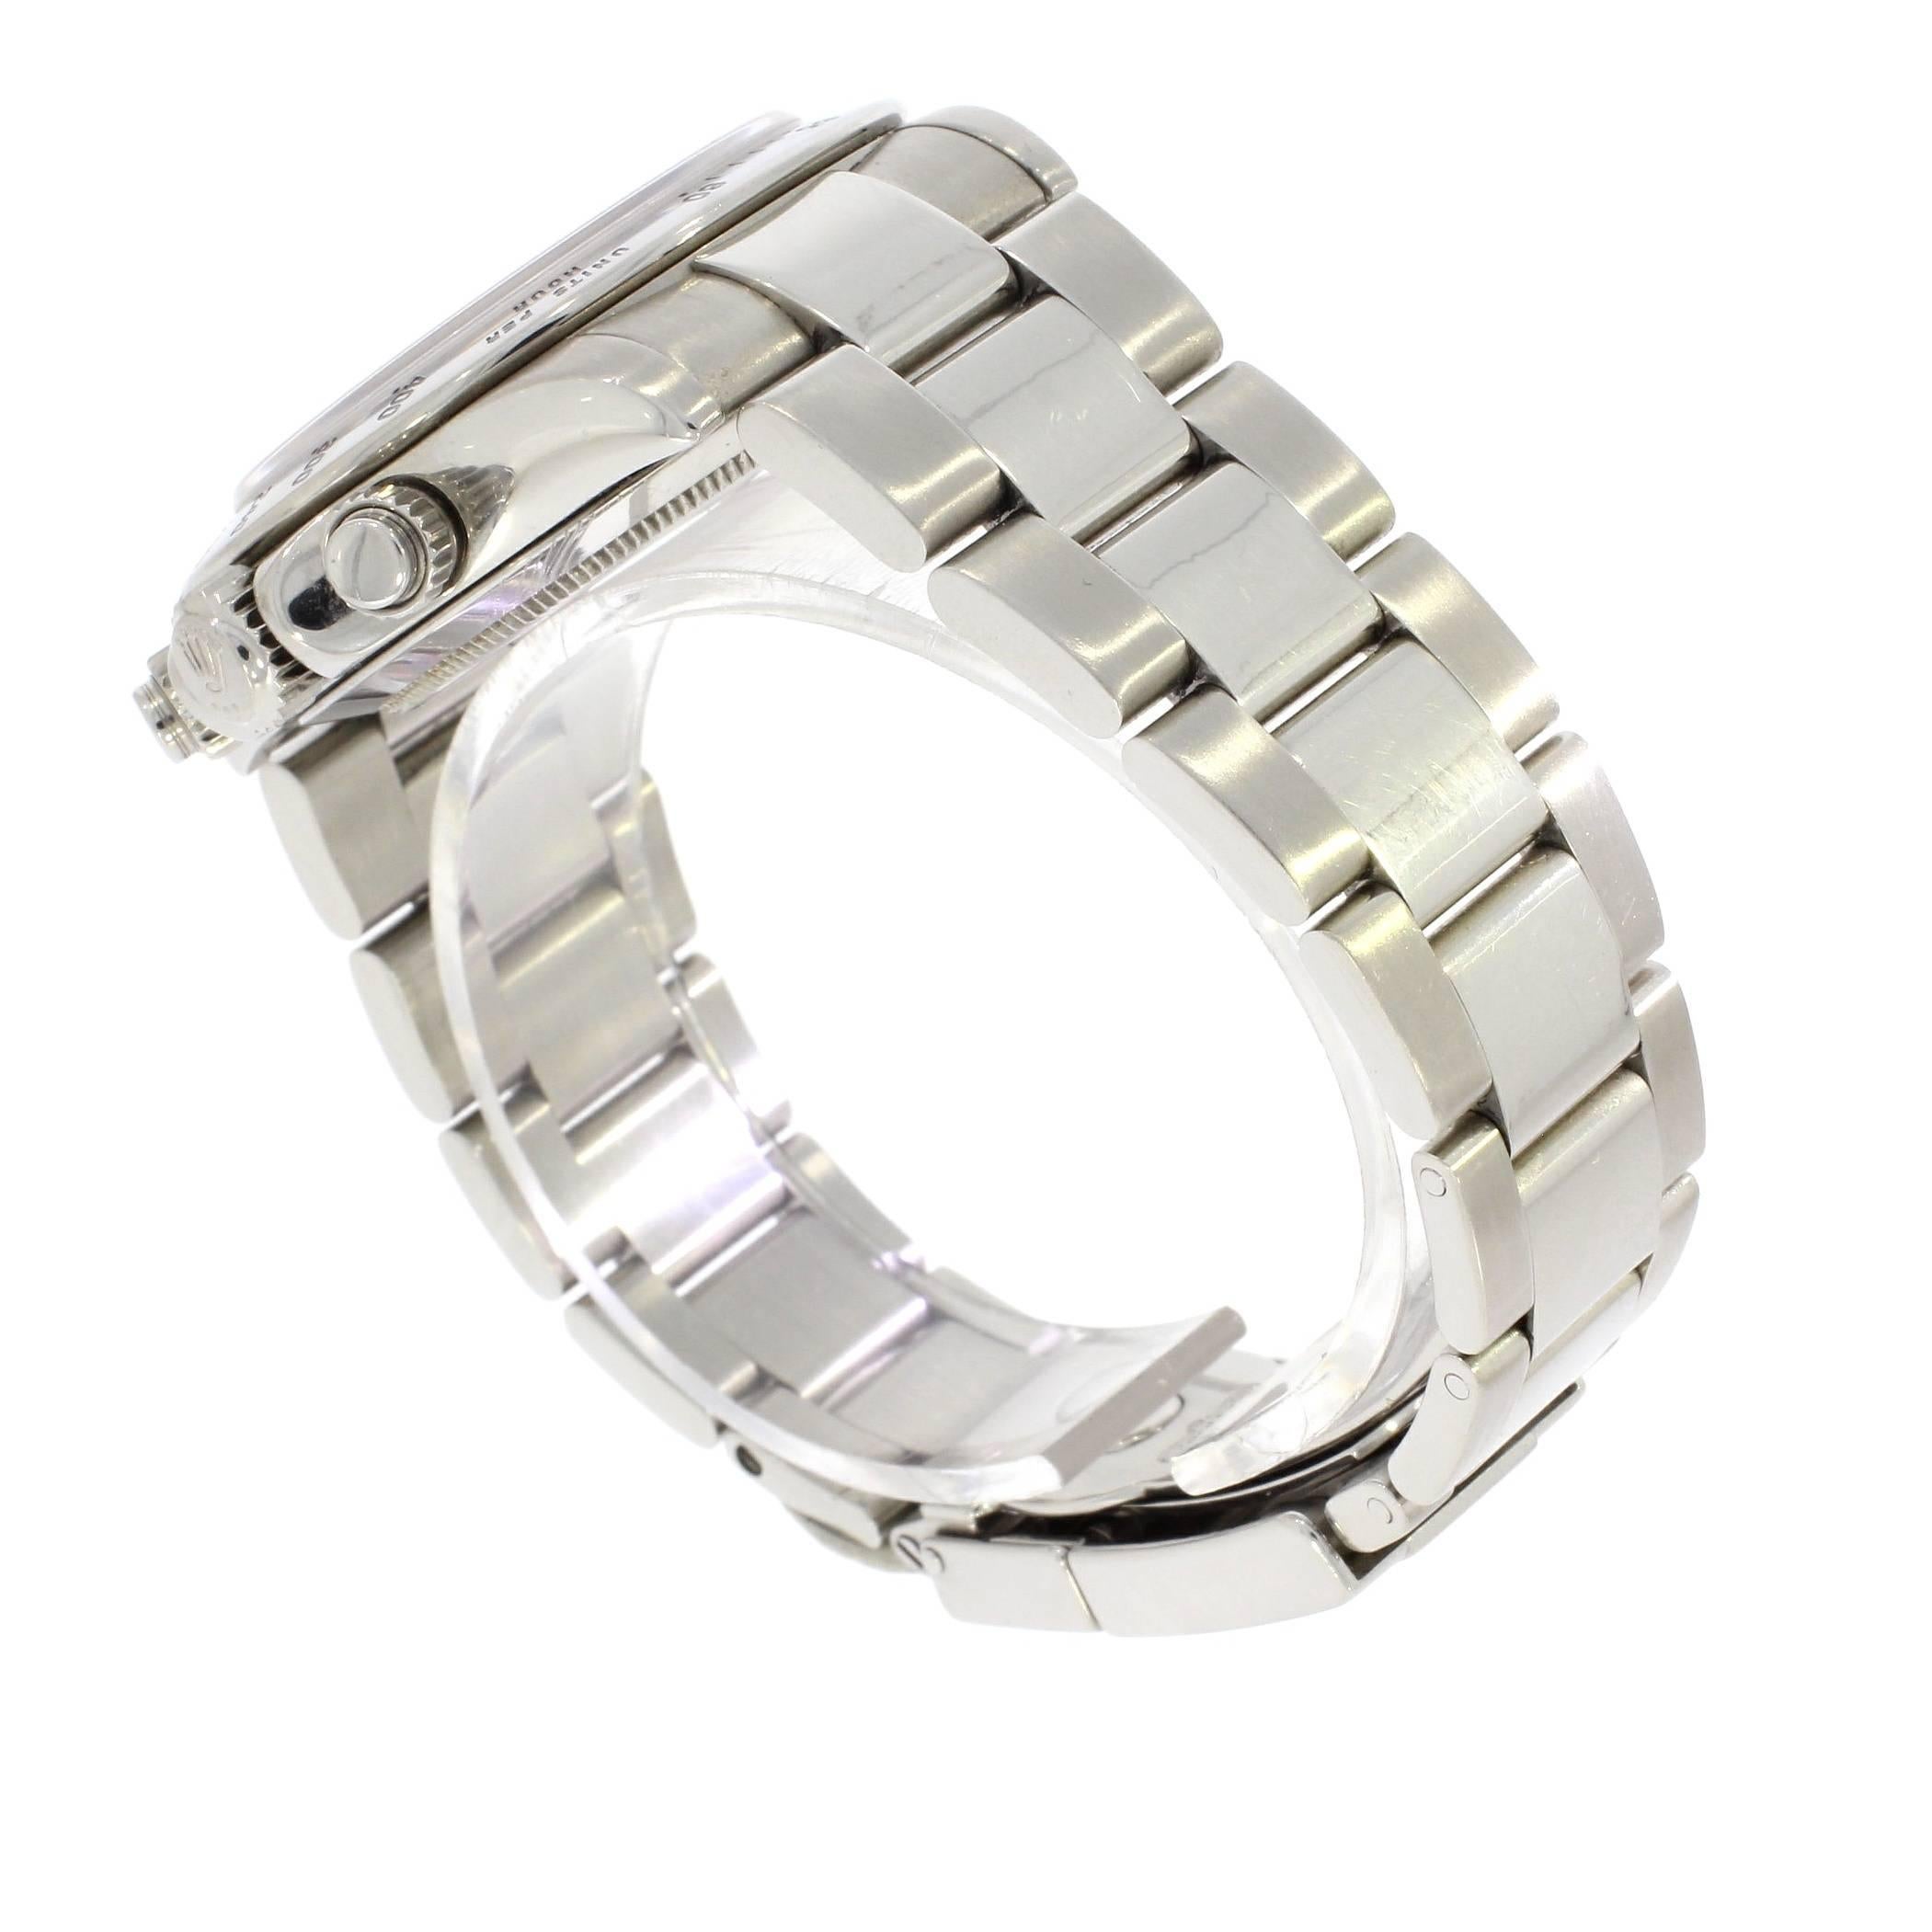 Rolex Daytona Stainless Steel Chronograph 116520 Automatic Wrist Watch 1